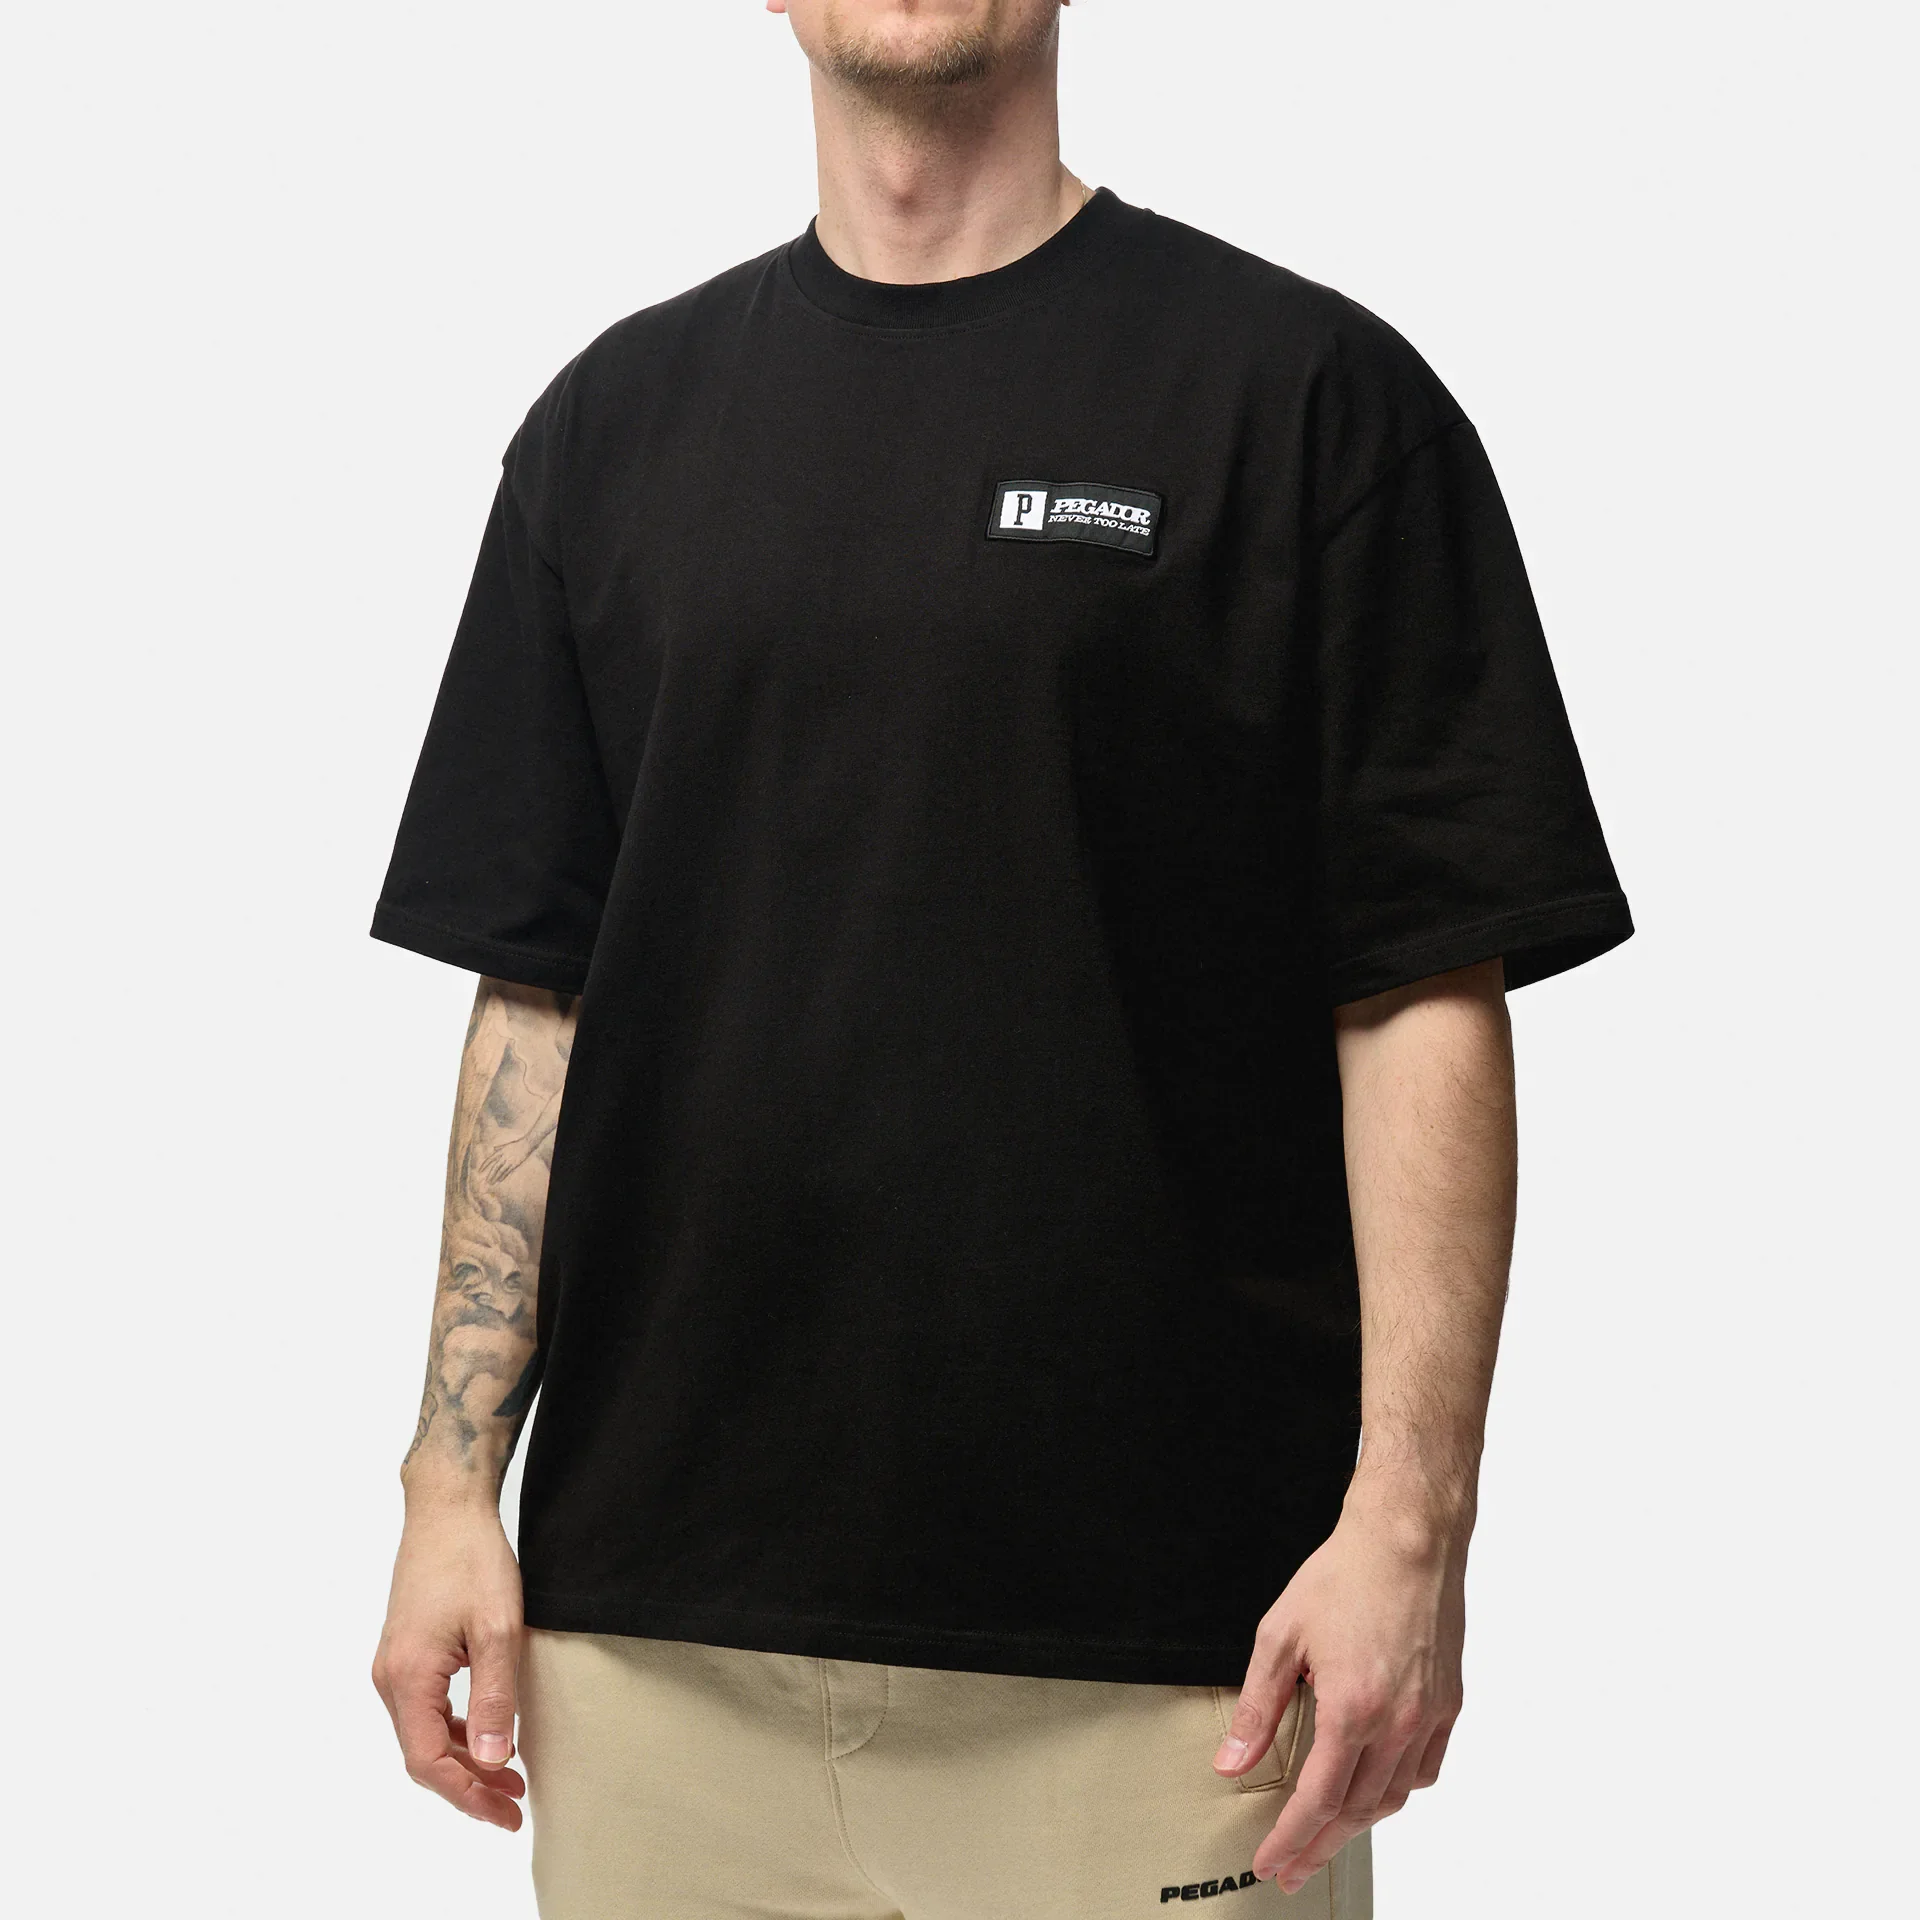 PEGADOR Antigua T-Shirt Washed Black